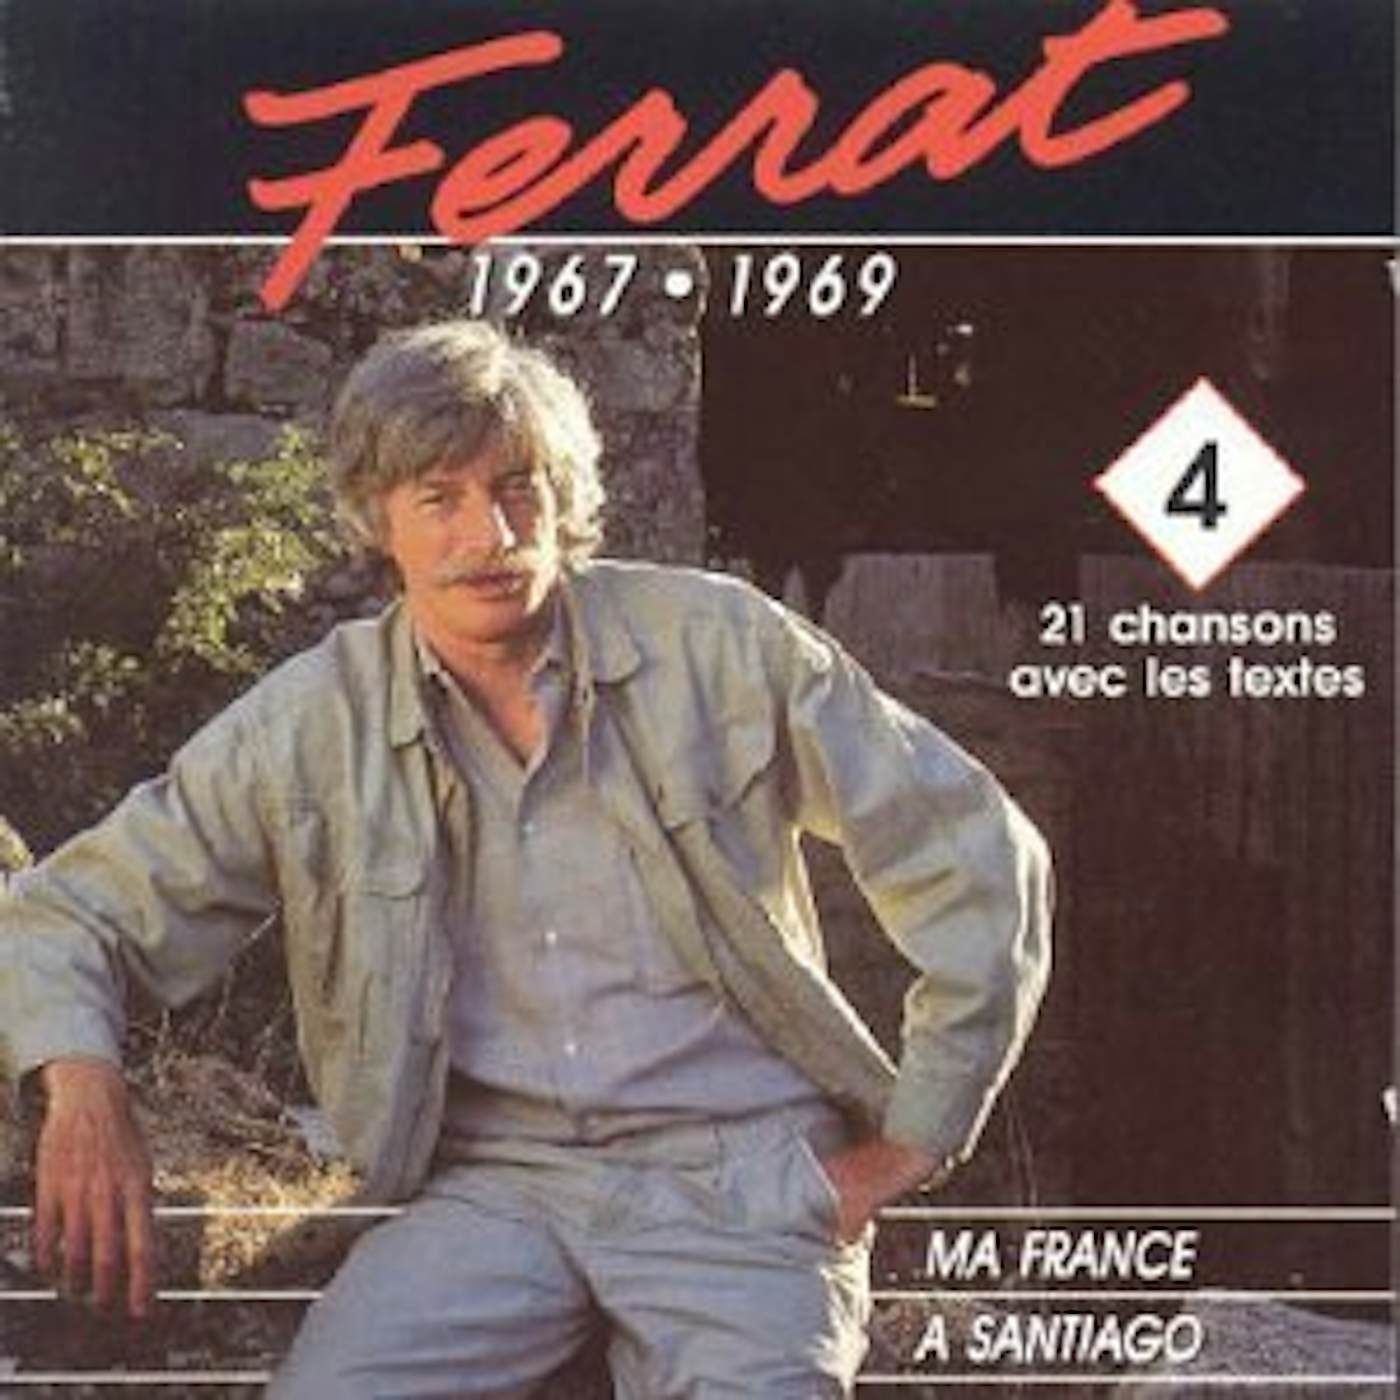 Jean Ferrat MA FRANCE 4 CD